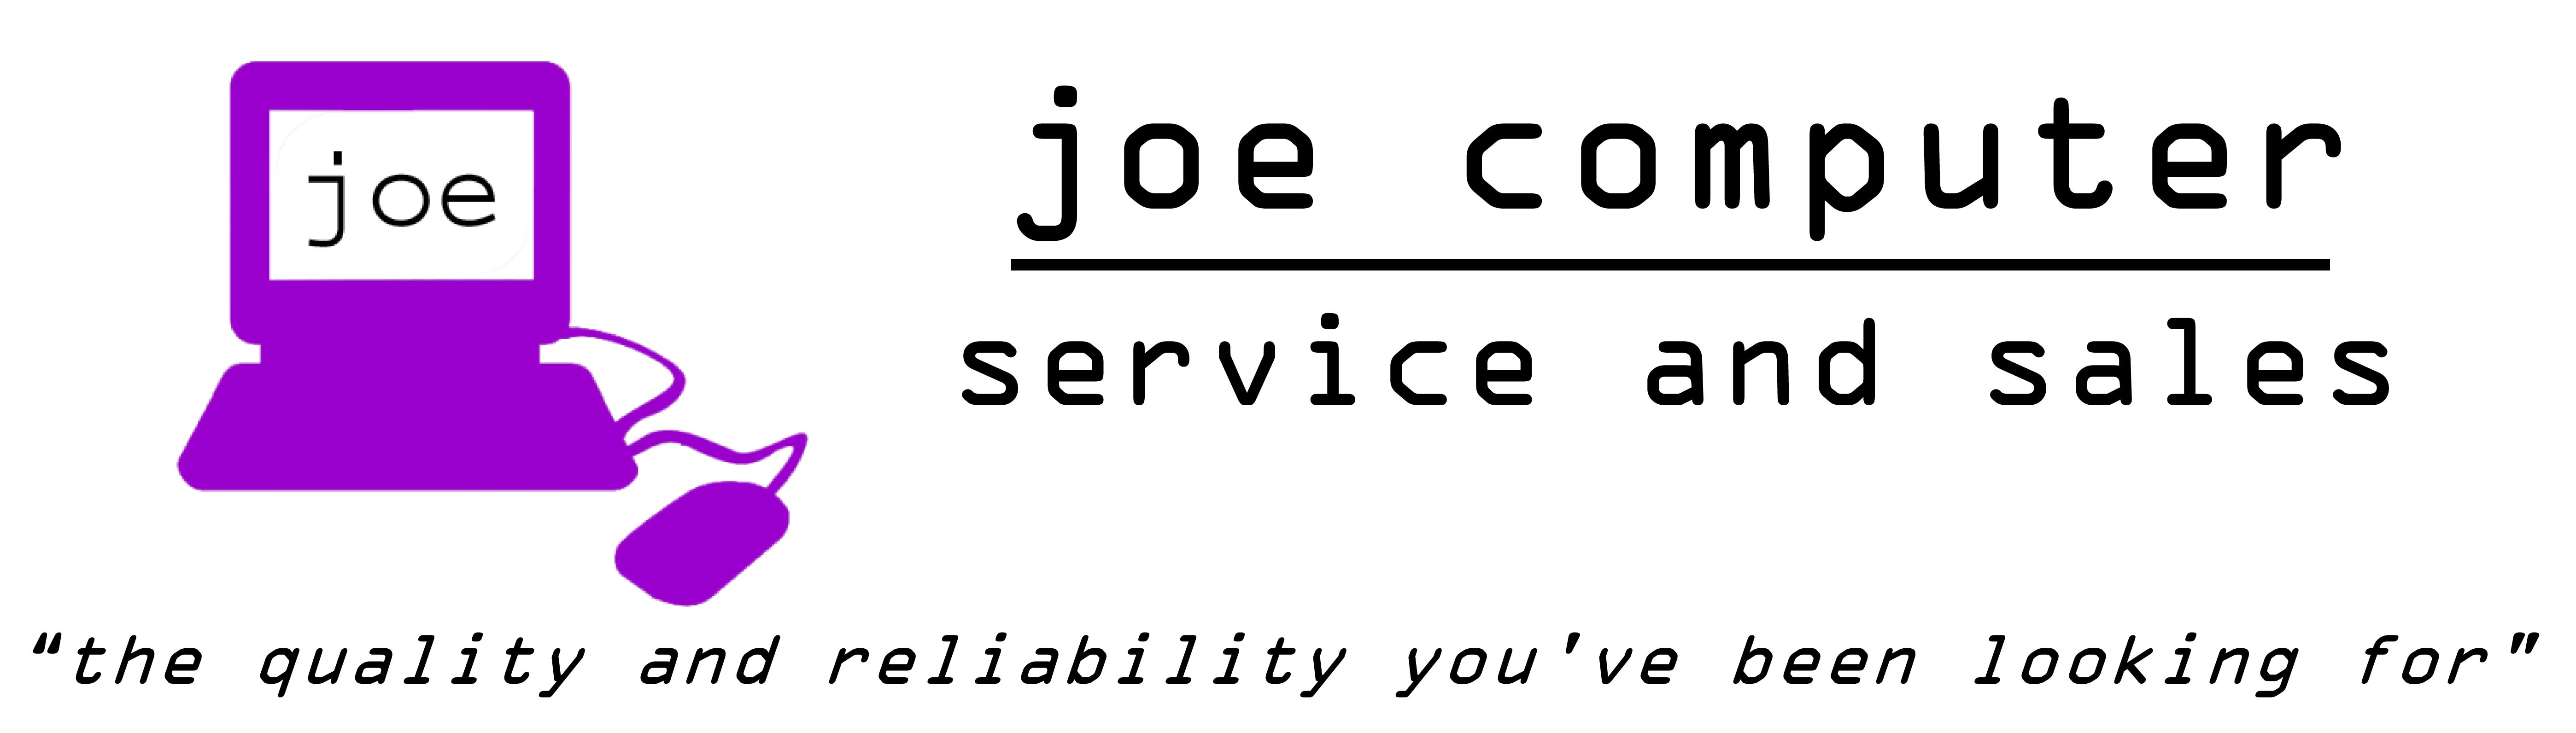 joe computer service and sales